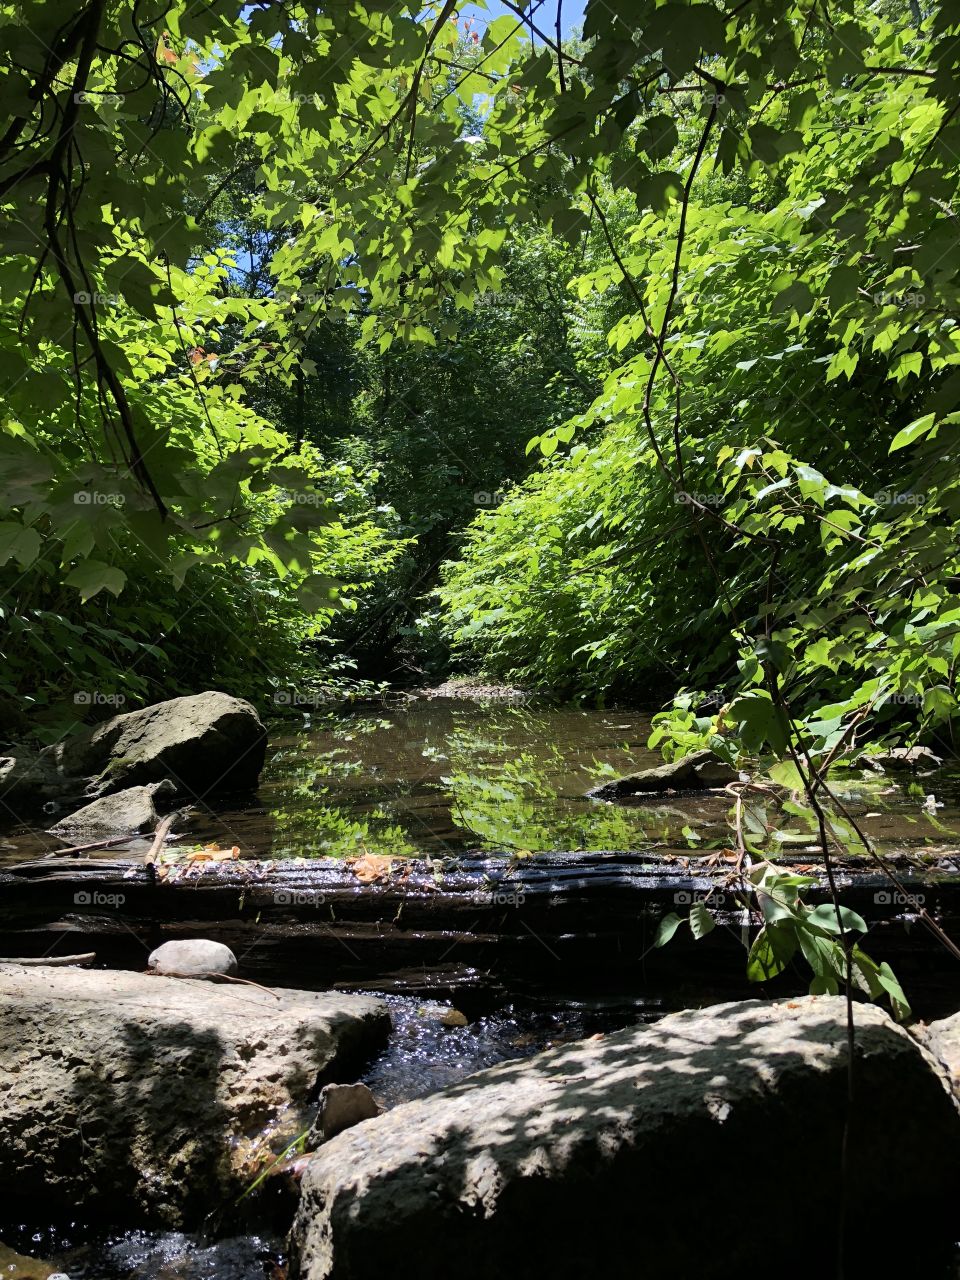 Peaceful creek ✌🏿